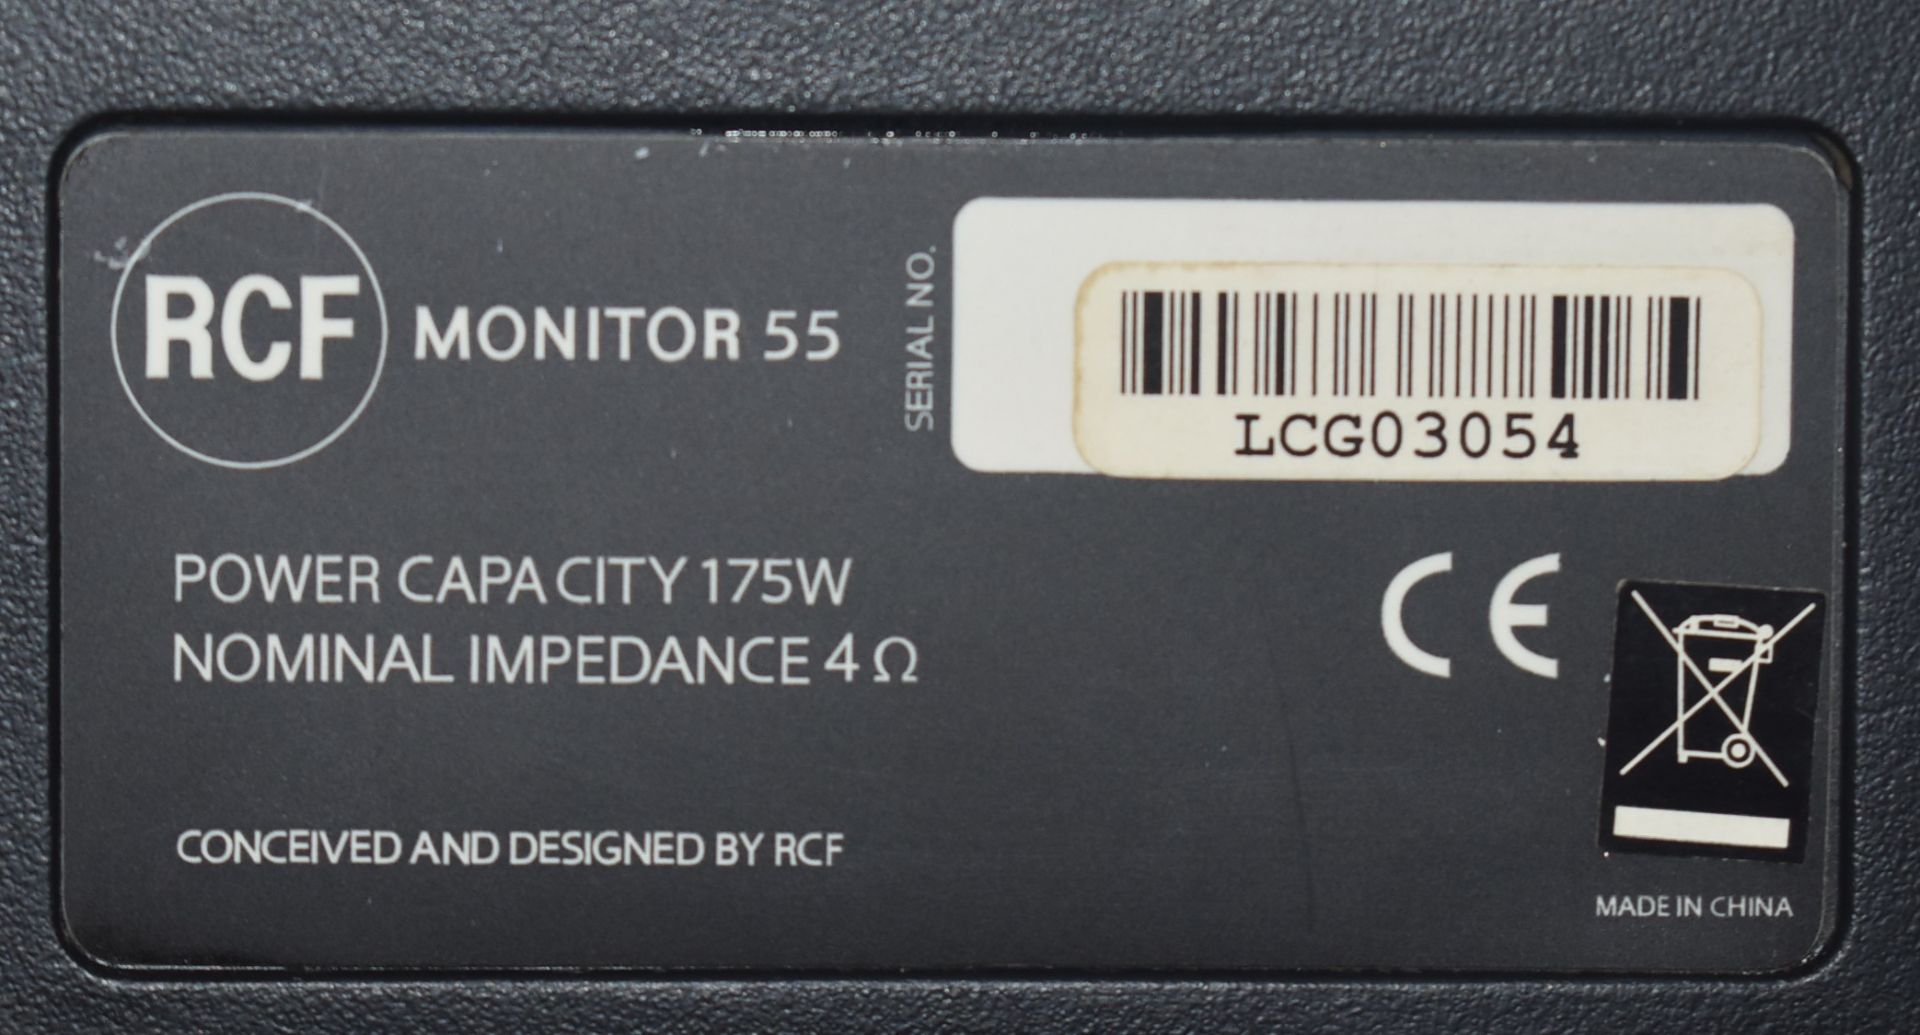 2 x RCF 175-Watt Two-Way Compact Monitor Speakers - Model Monitor 55 - RRP £246 - Ref: JP/JP - CL700 - Image 3 of 3